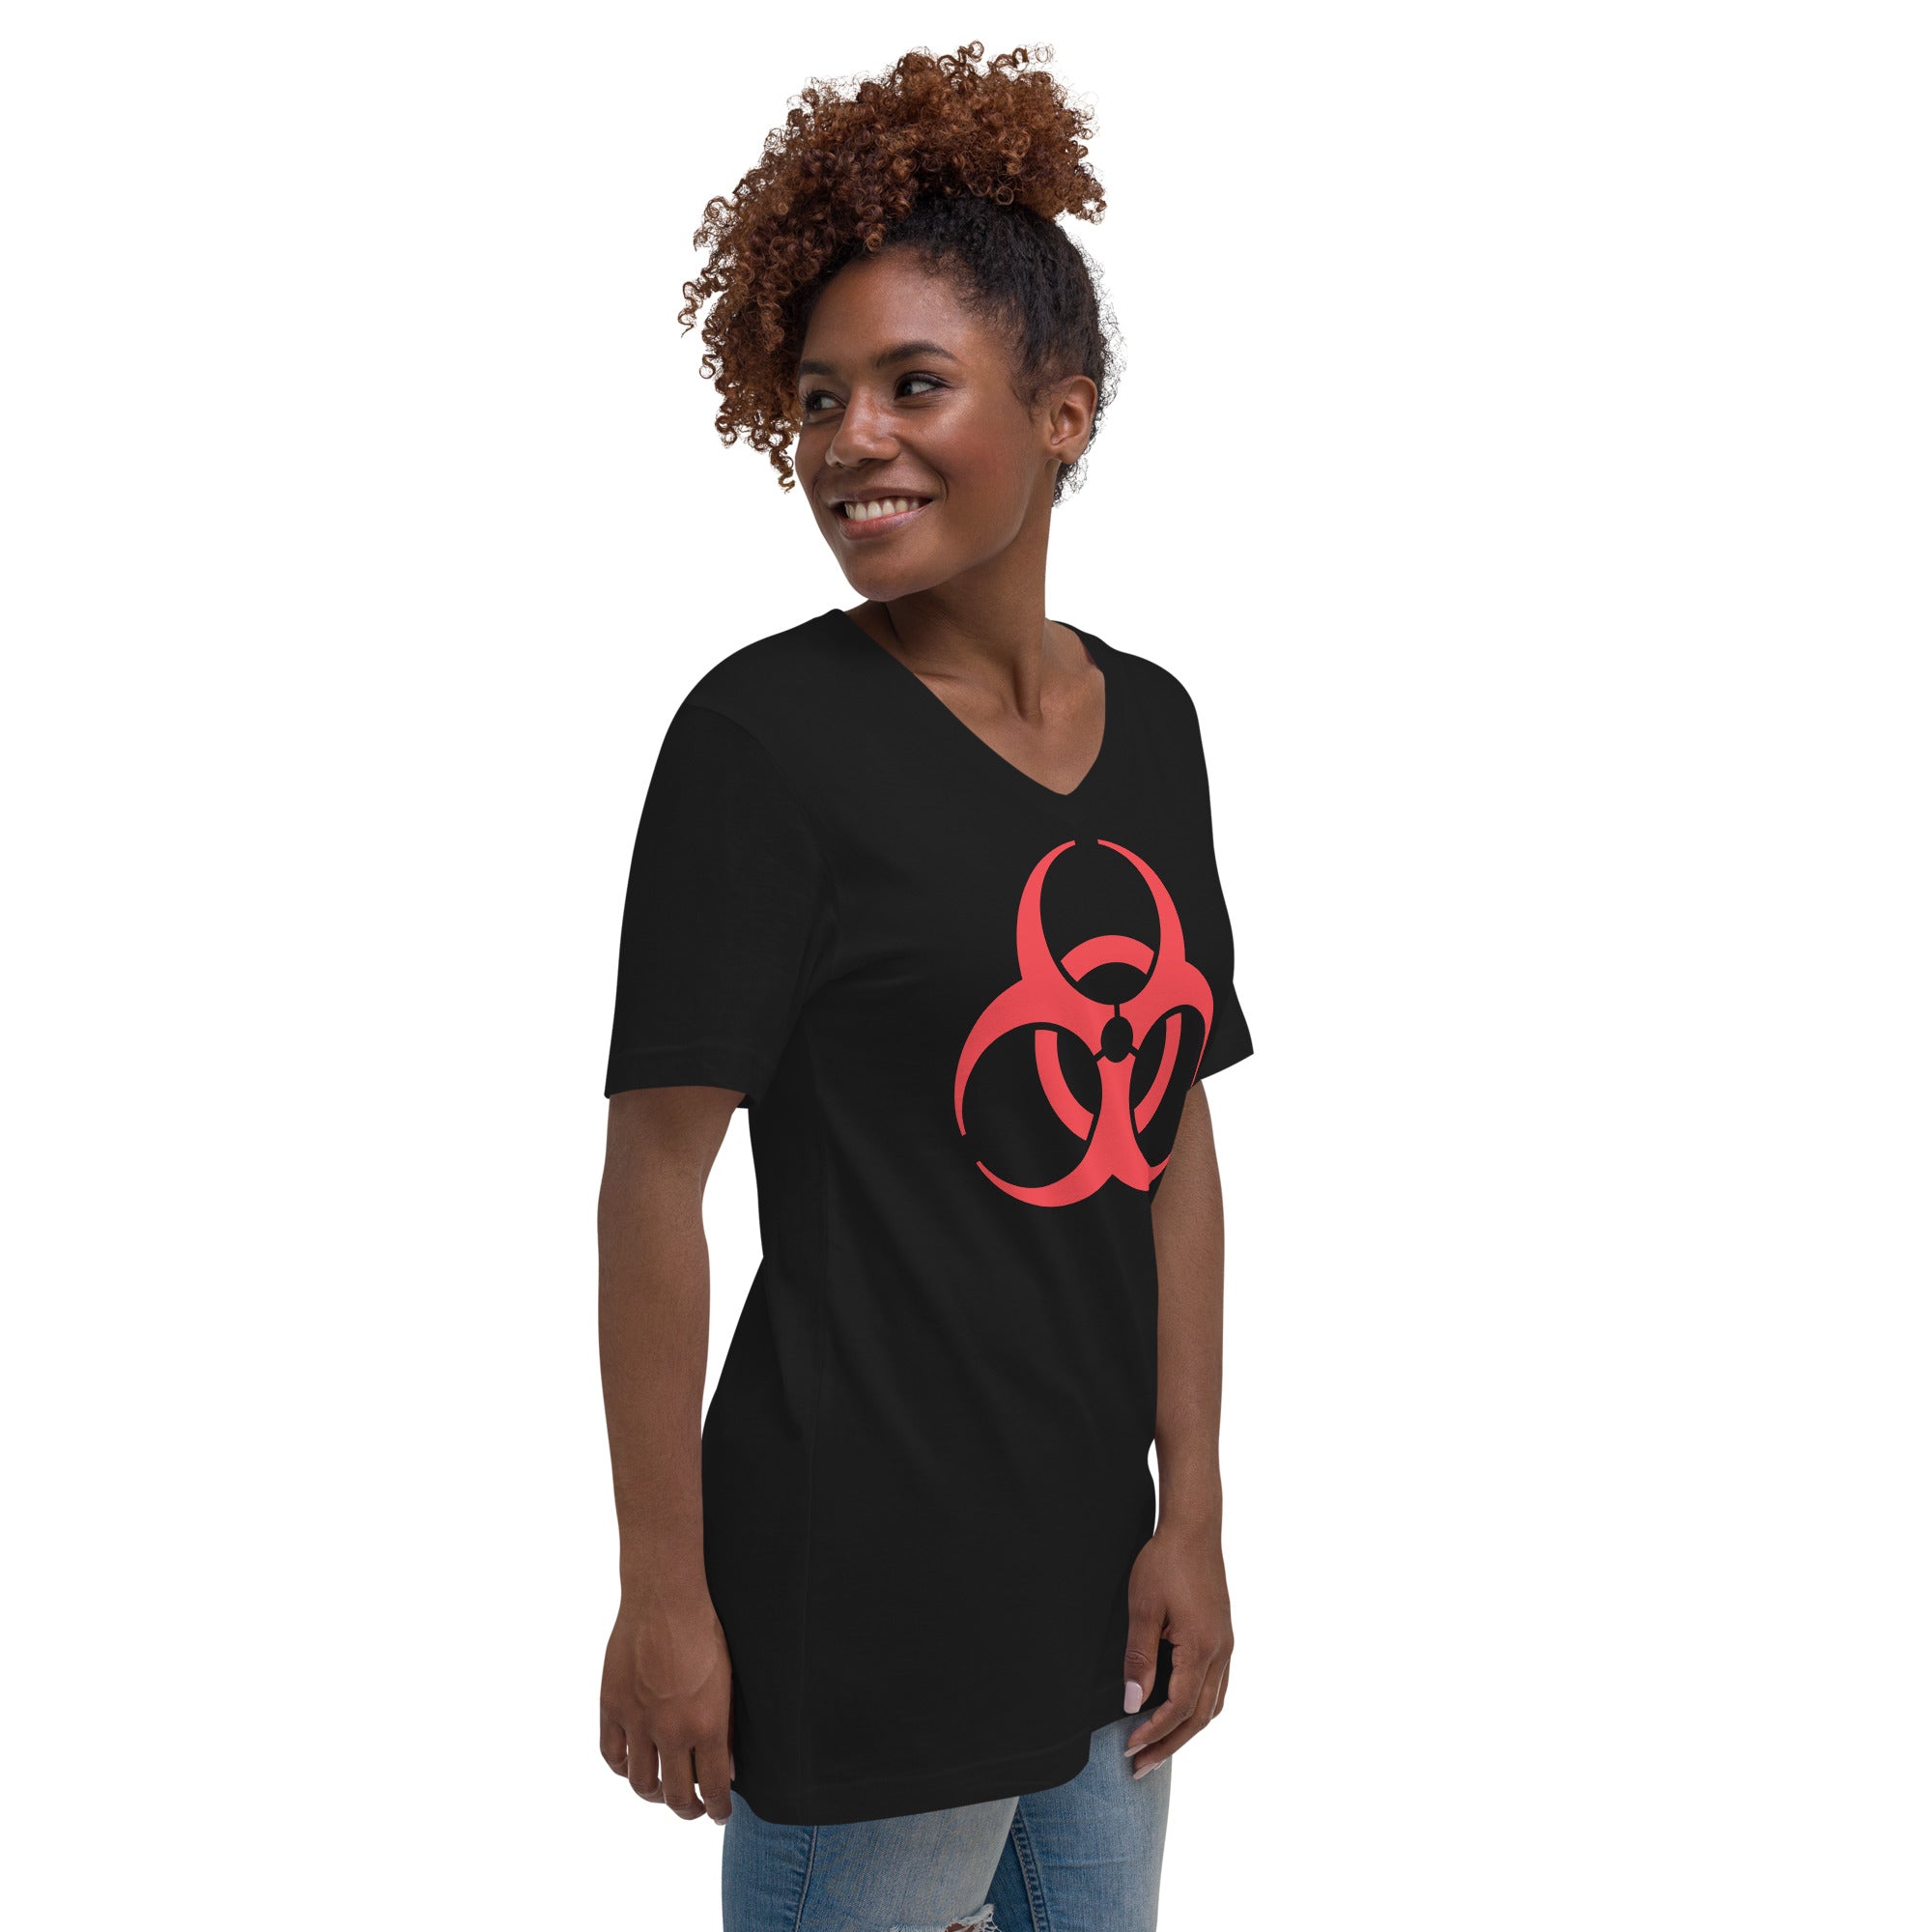 Red Biohazard Sign Toxic Chemical Symbol Women’s Short Sleeve V-Neck T-Shirt